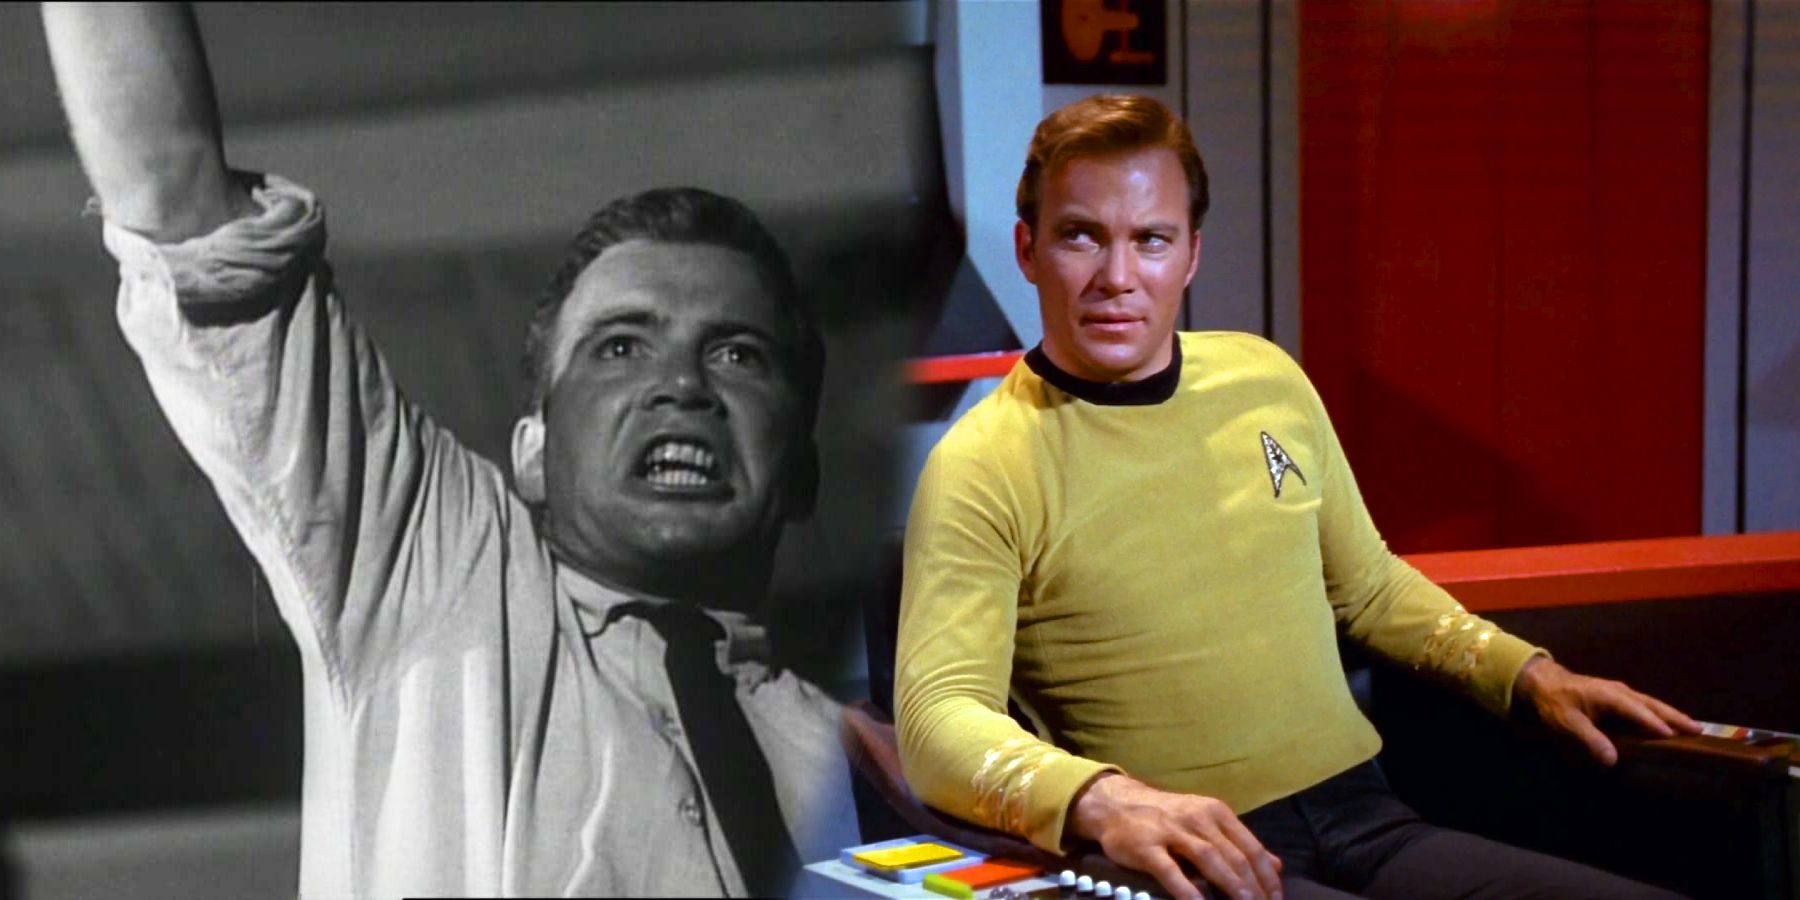 William Shatner in The Intruder and Star Trek